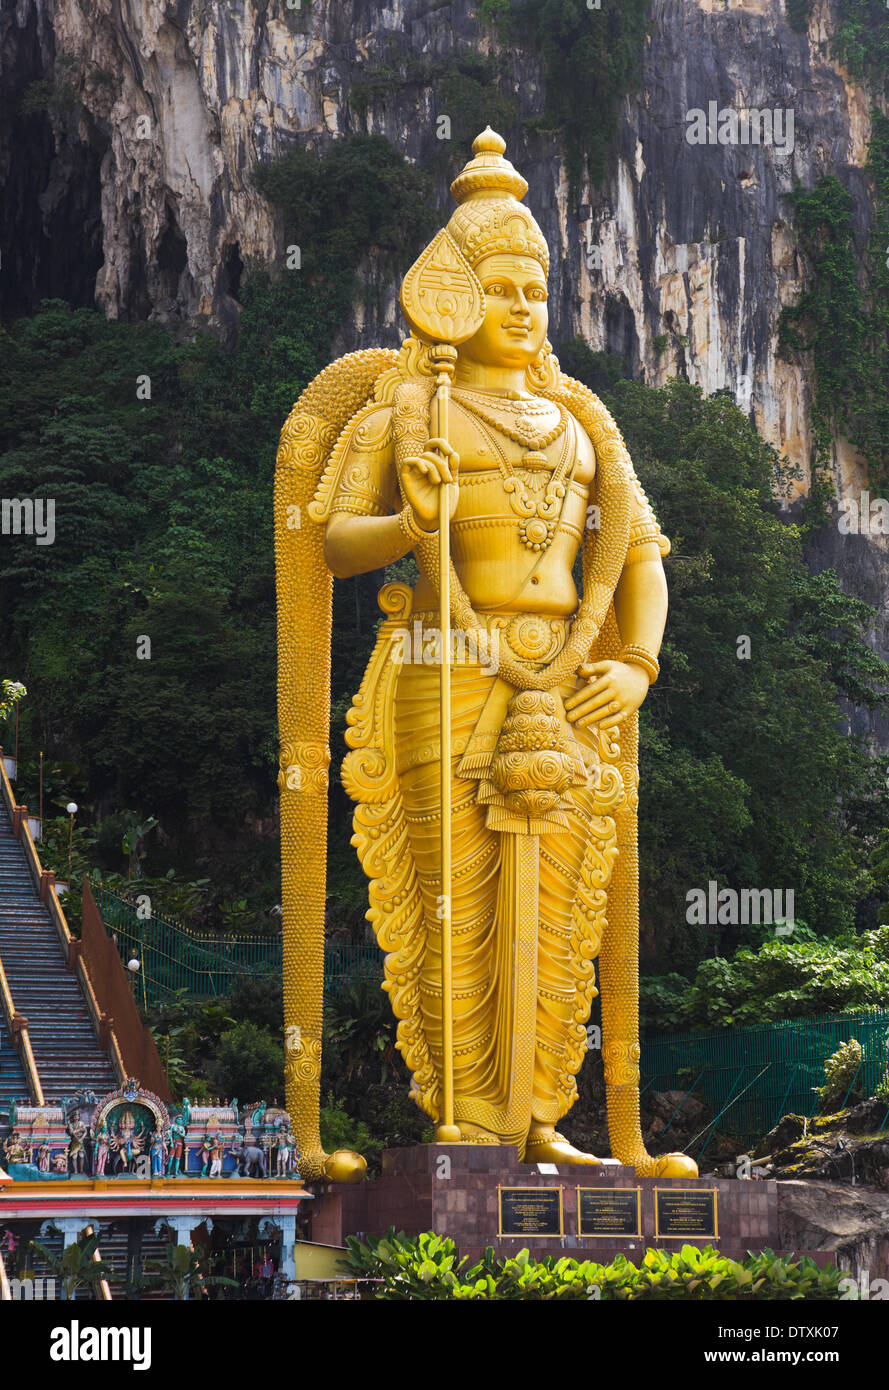 Kuala lumpur hindu tempel -Fotos und -Bildmaterial in hoher Auflösung